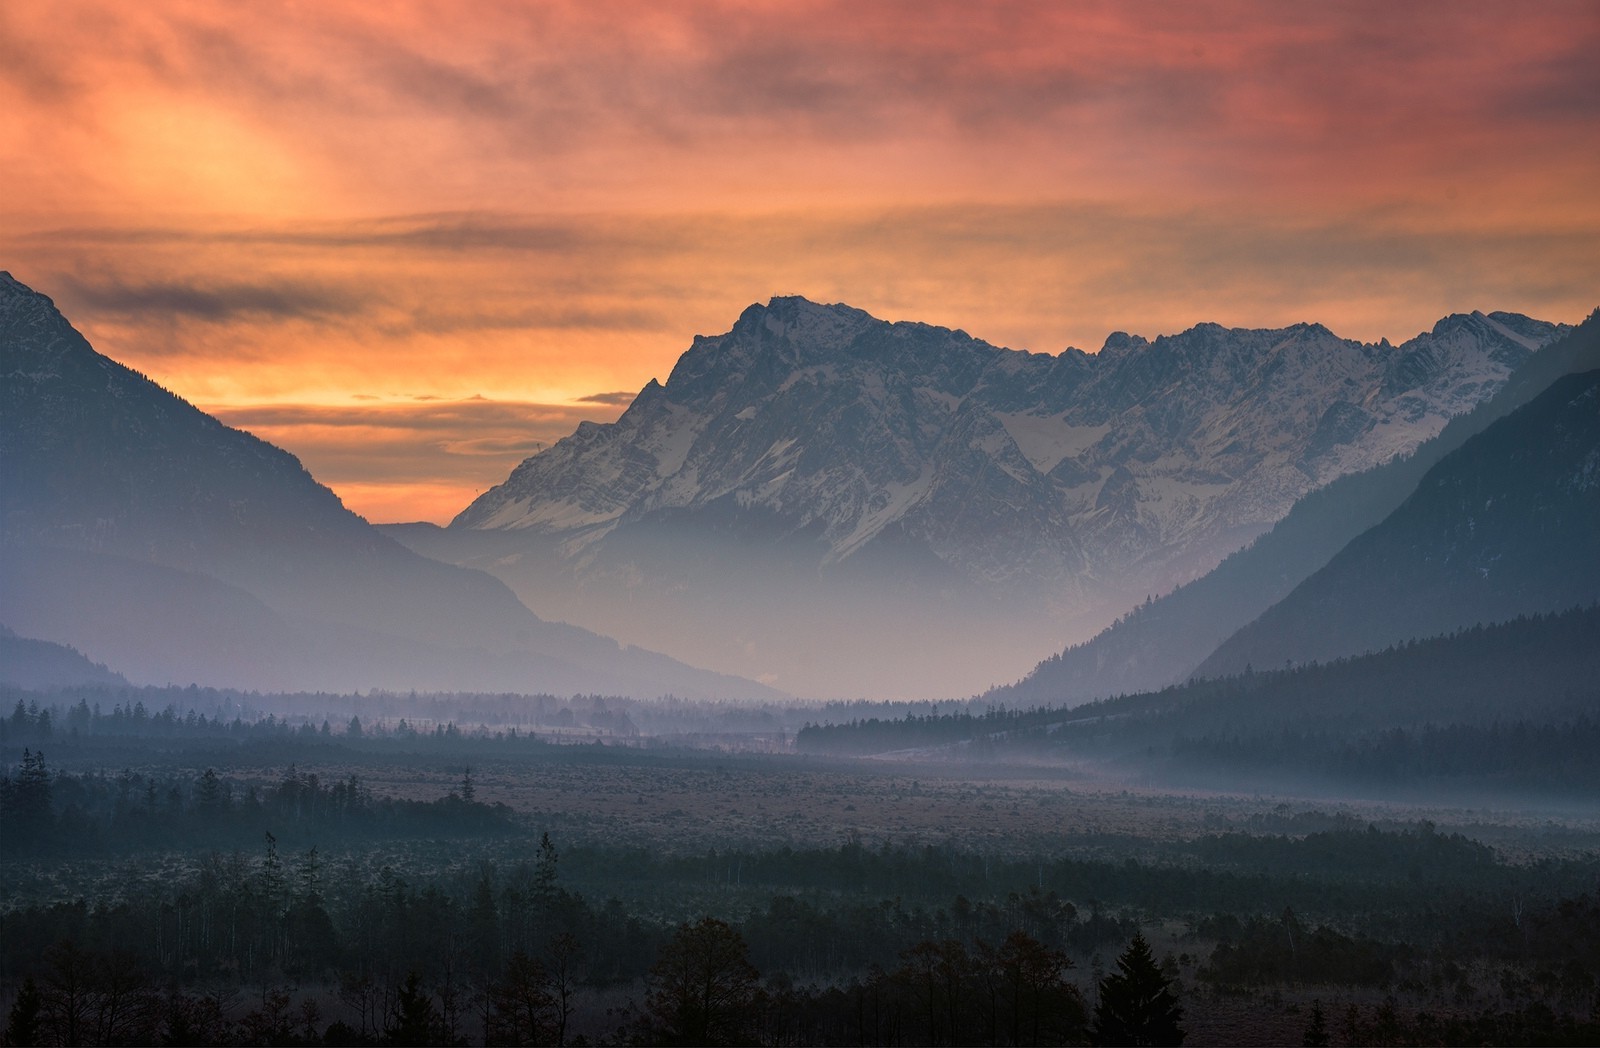 Photography Nature Landscape Mountains Mist Sunset